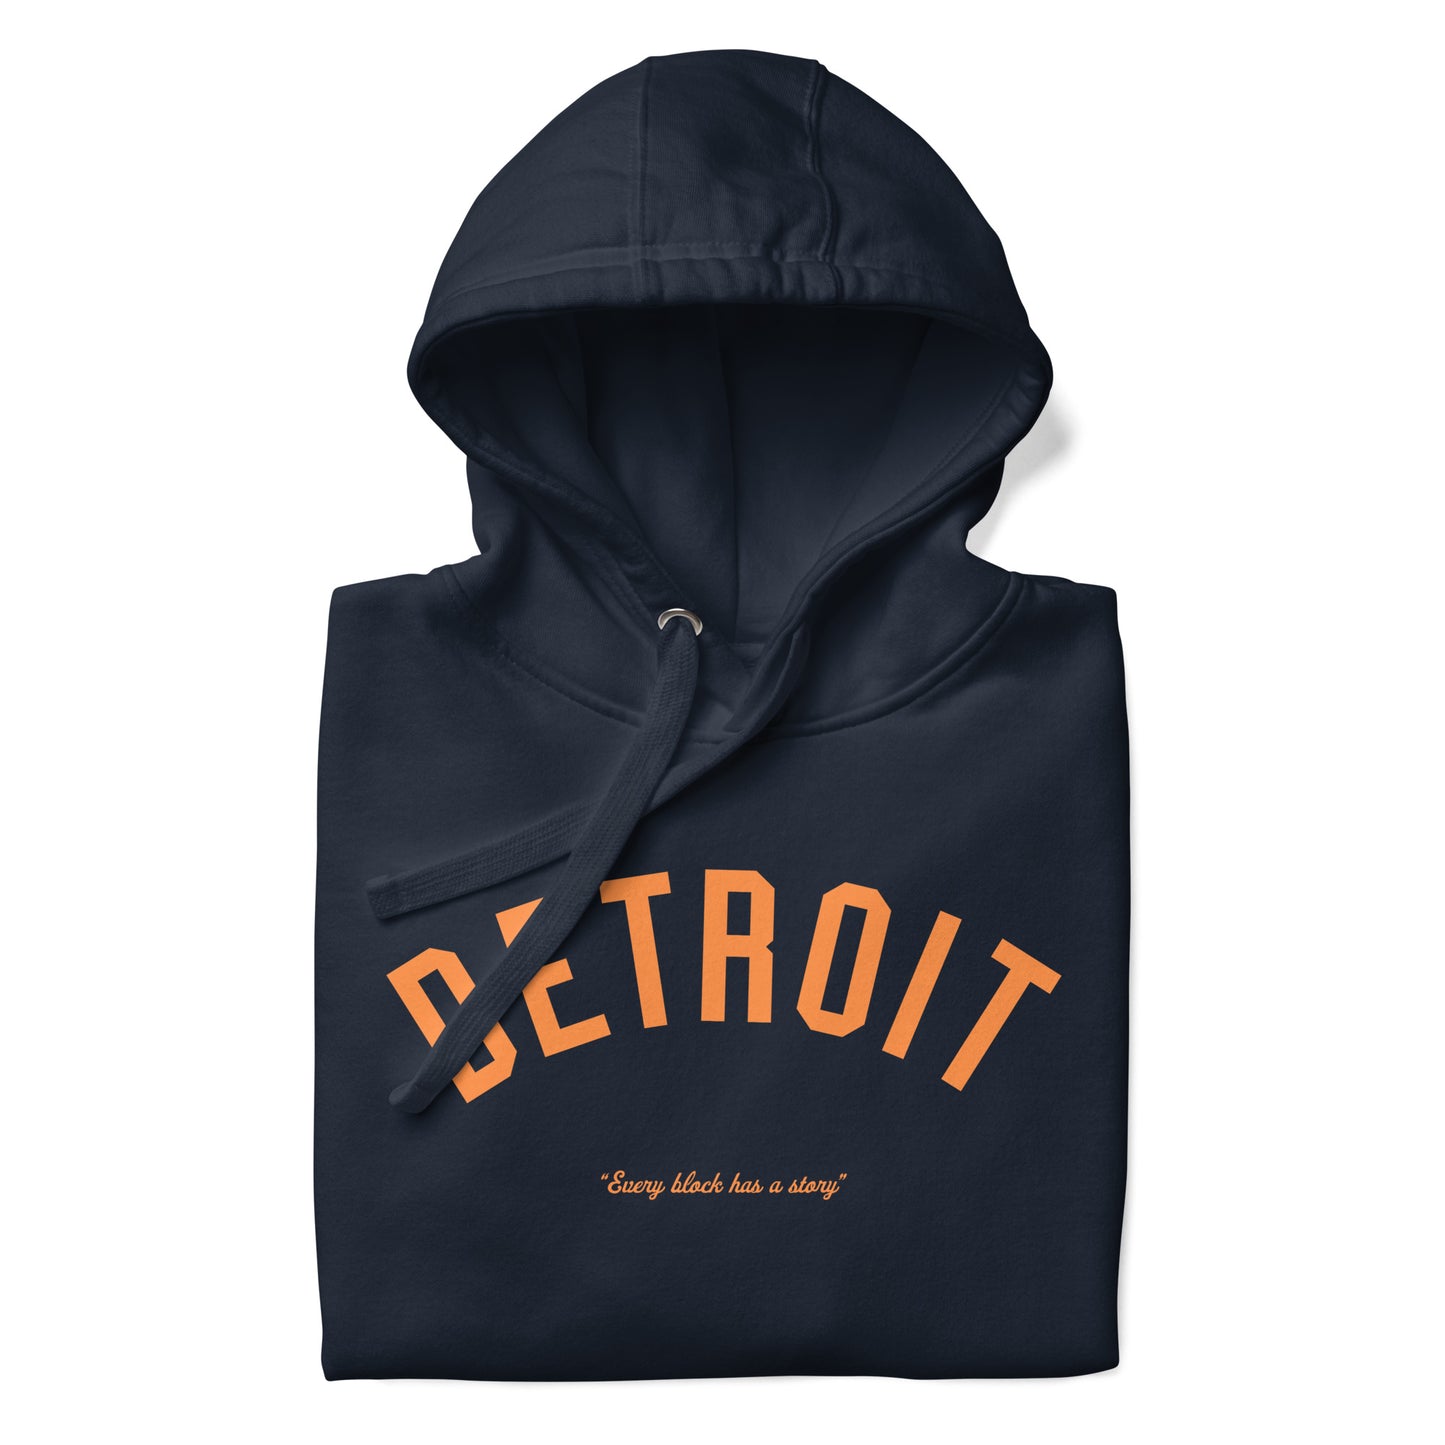 Detroit Story Sweatshirt